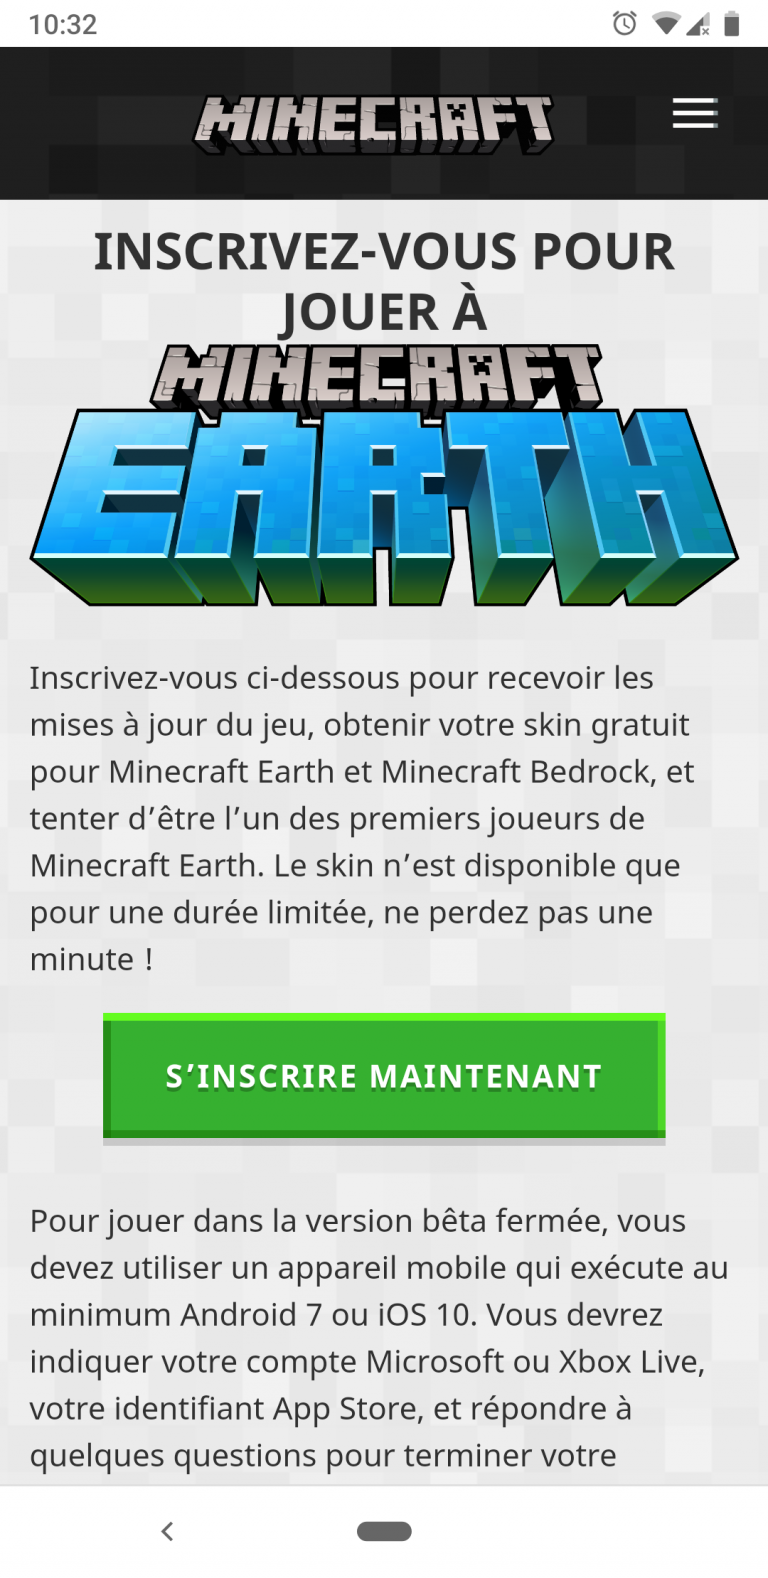 minecraft earth apk download